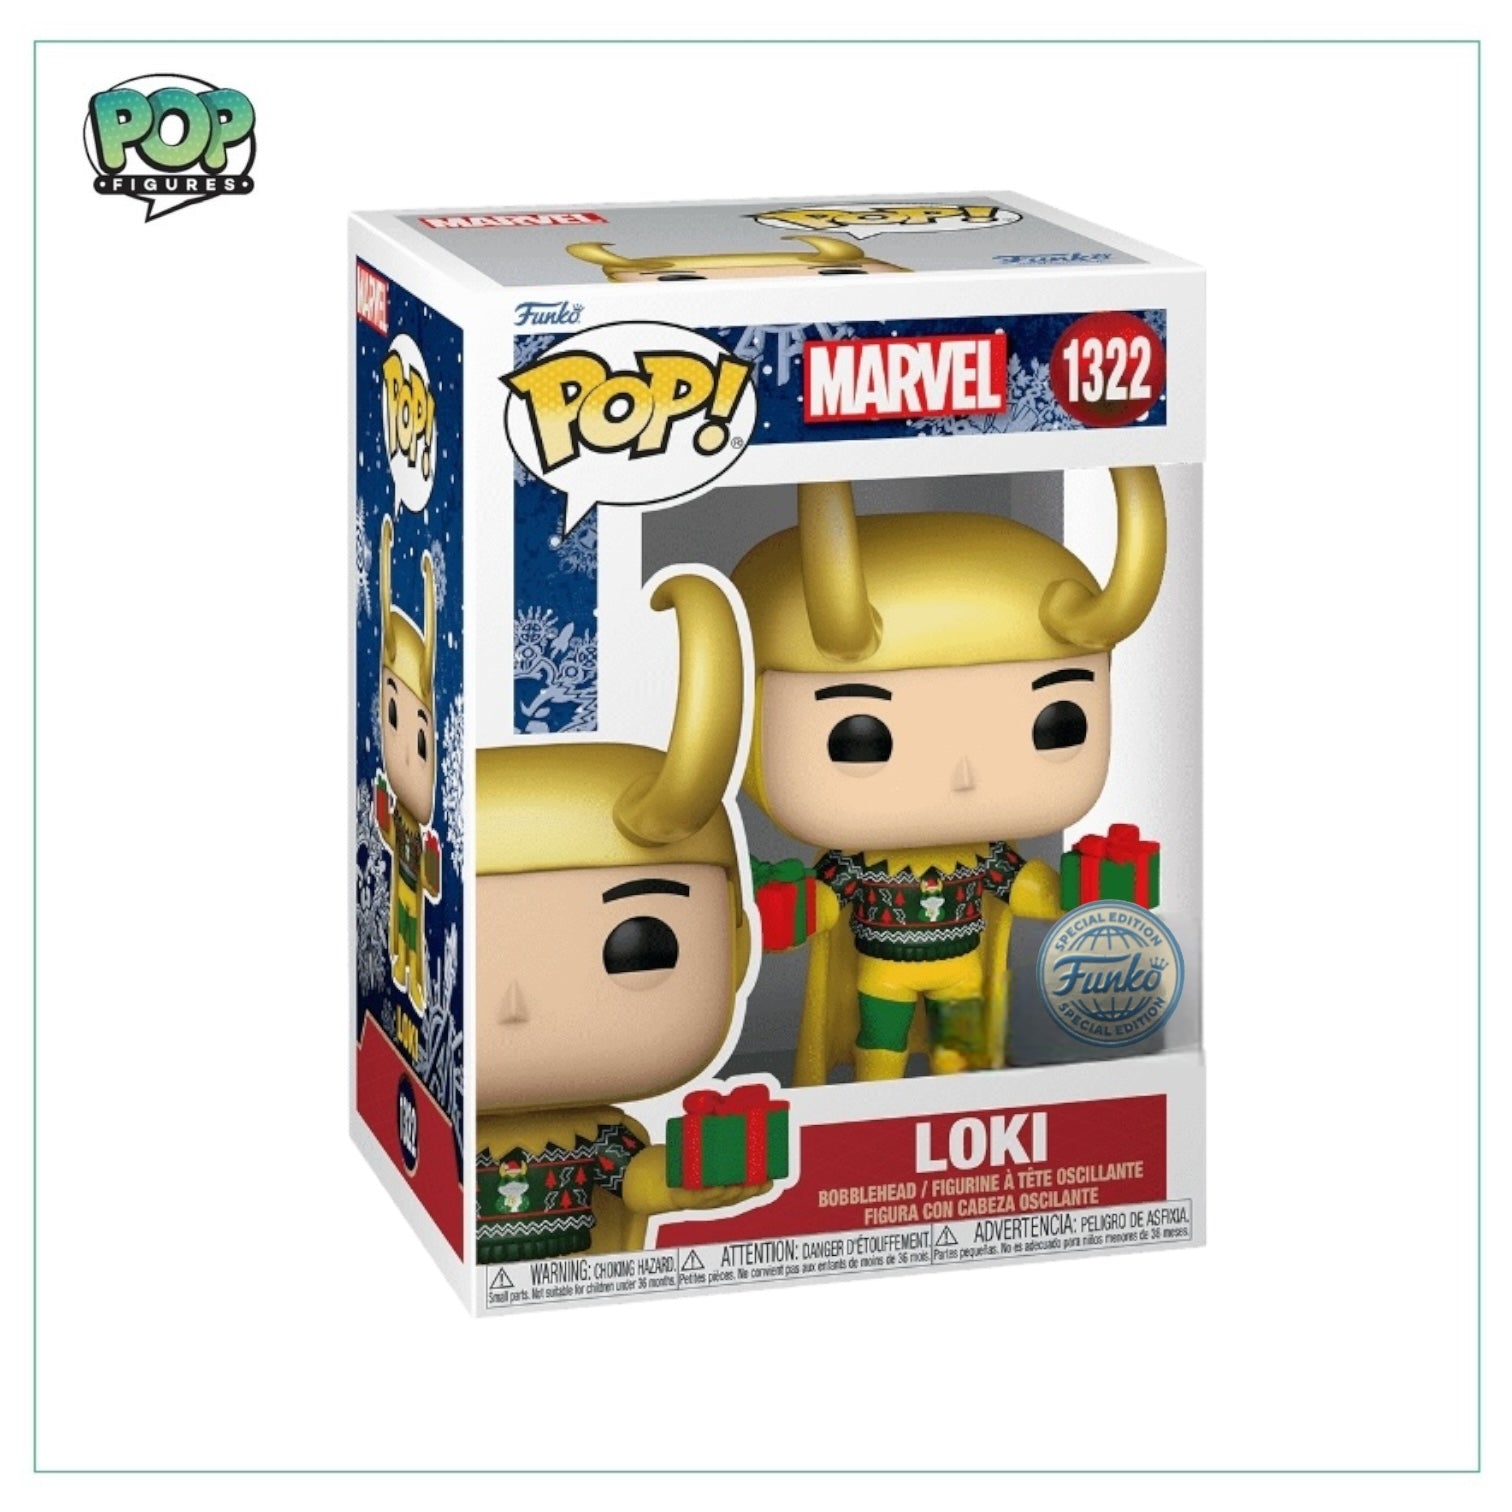 Loki  #1322 Funko Pop! - Marvel - Special Edition - Pop Figures Exclusive